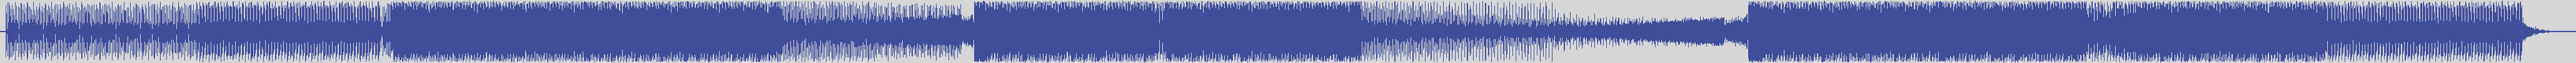 nonstop_one [NSO003] Anthony Attalla - Rodman [Original Mix] audio wave form